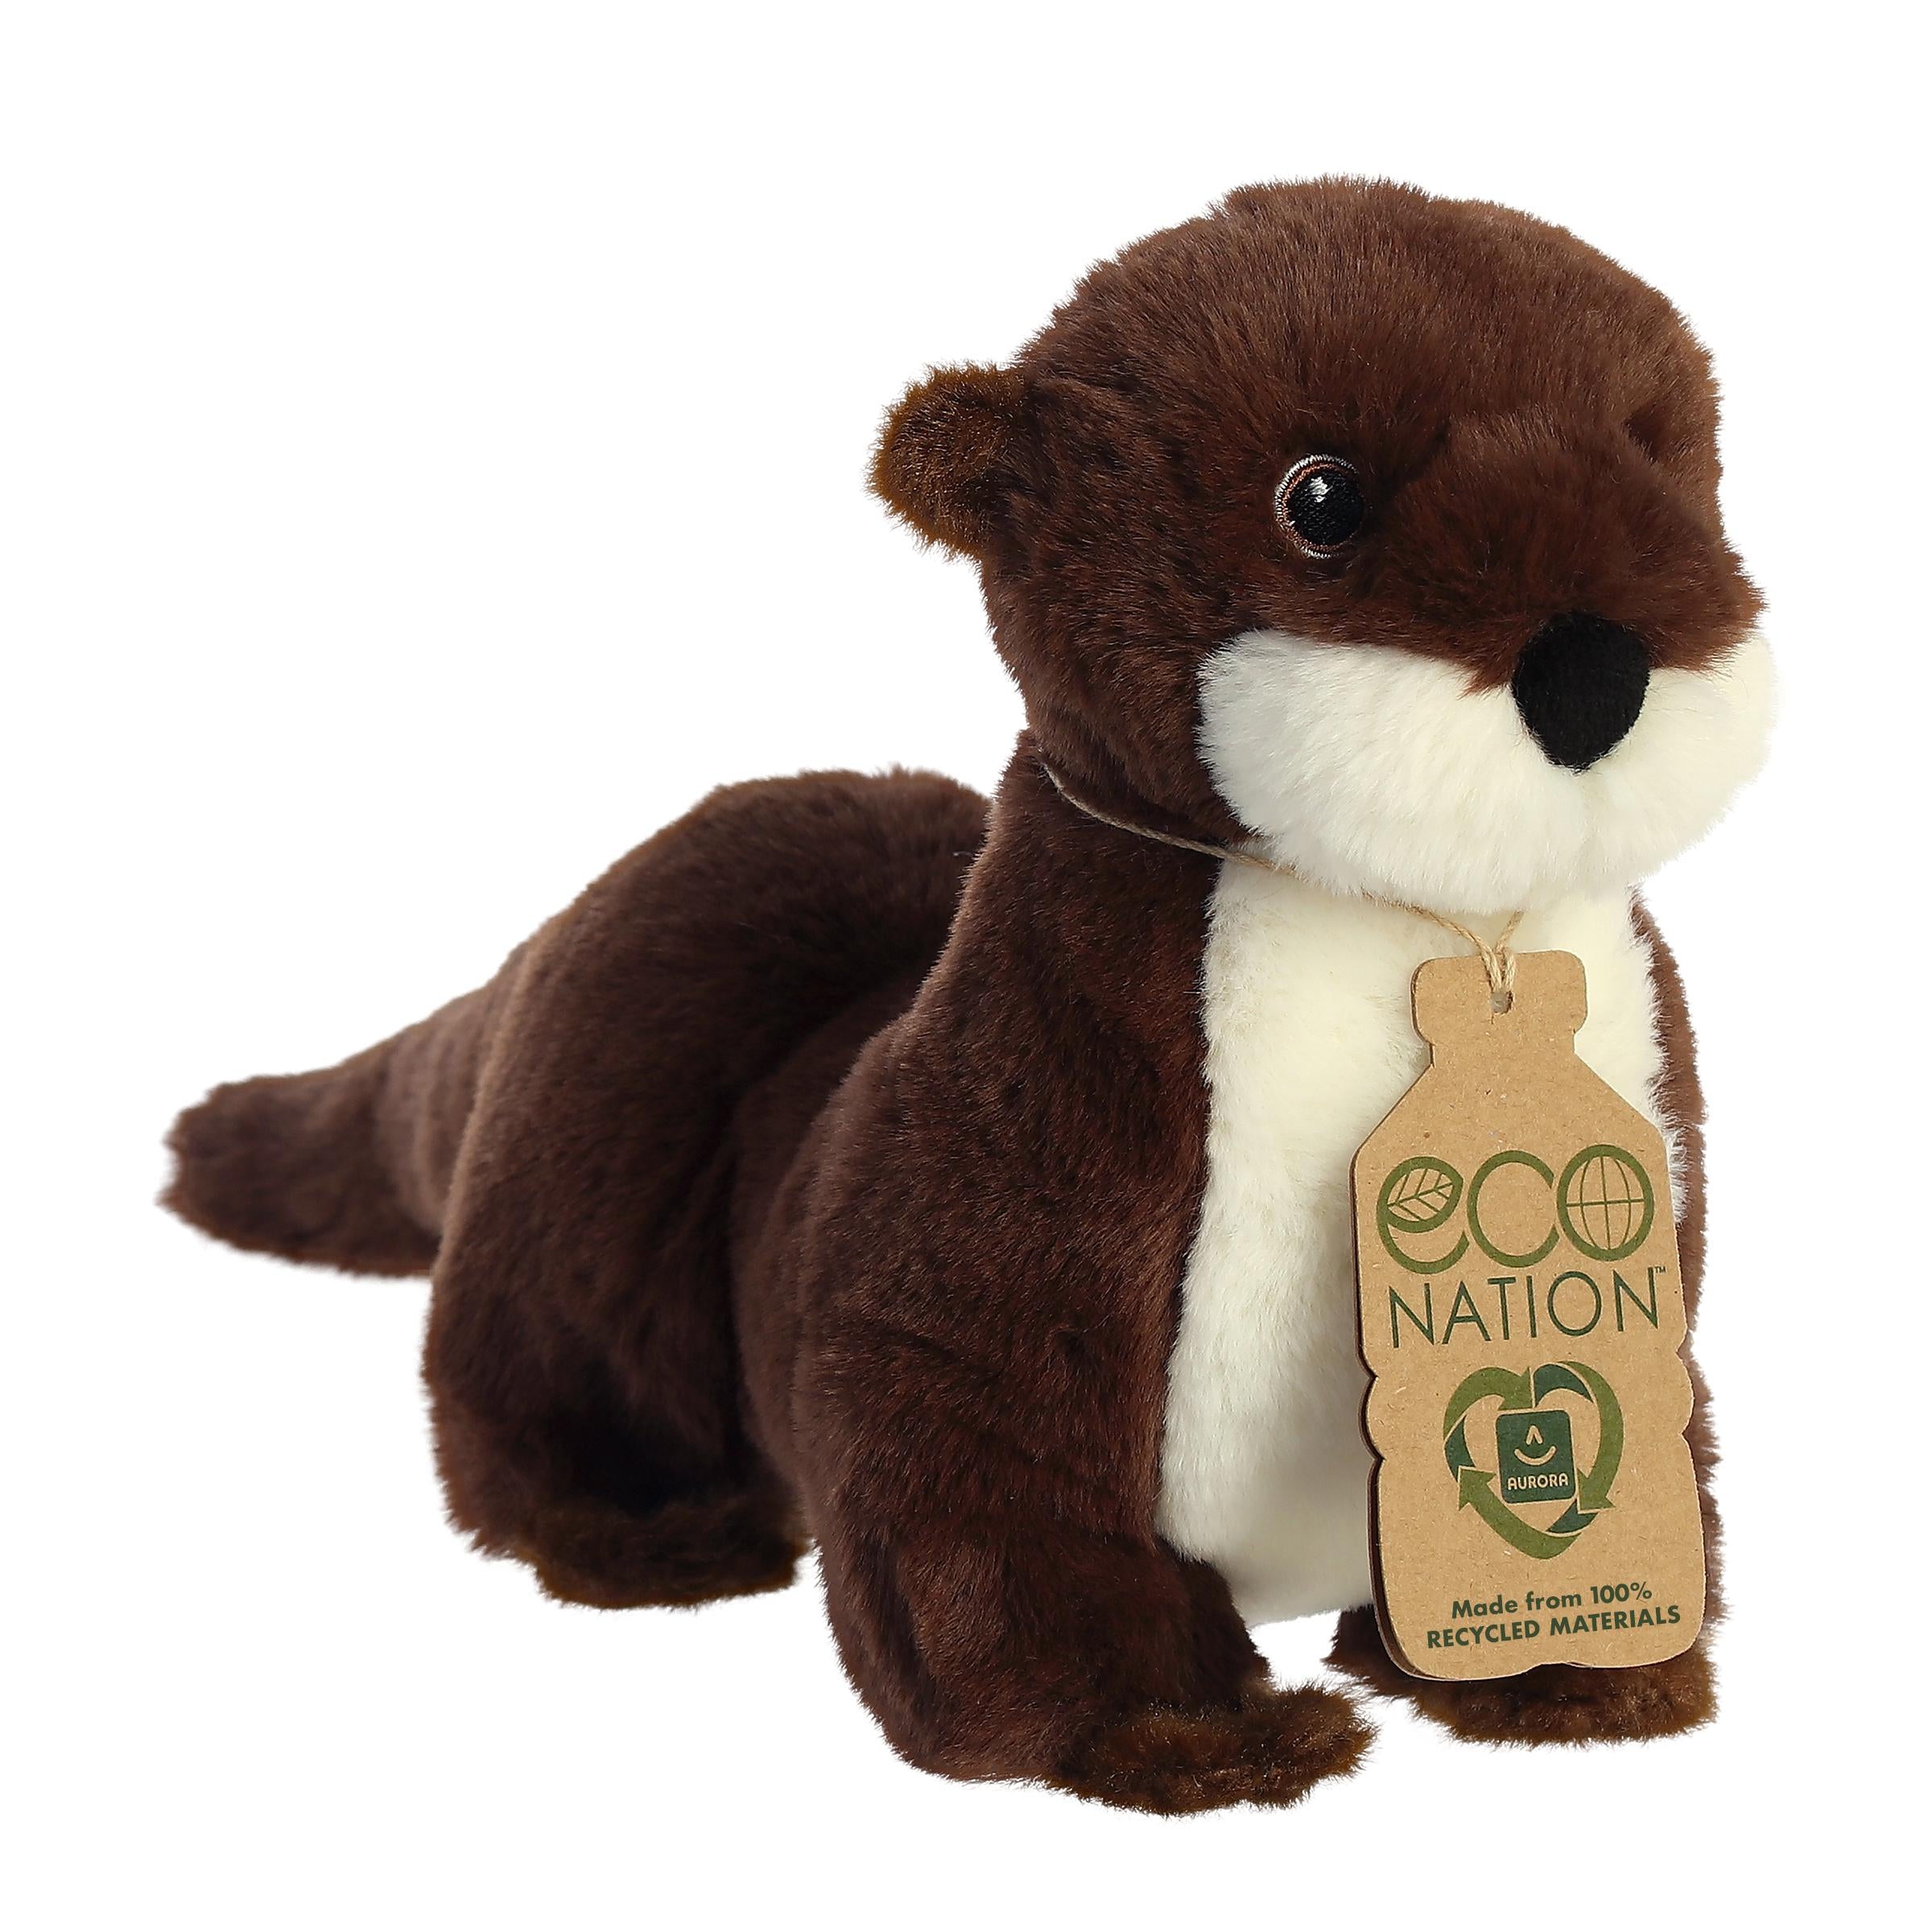 River Otter Ã¢â‚¬â€œ Playful Eco-Nation Stuffed Animals Ã¢â‚¬â€œ Aurora –  Aurora®